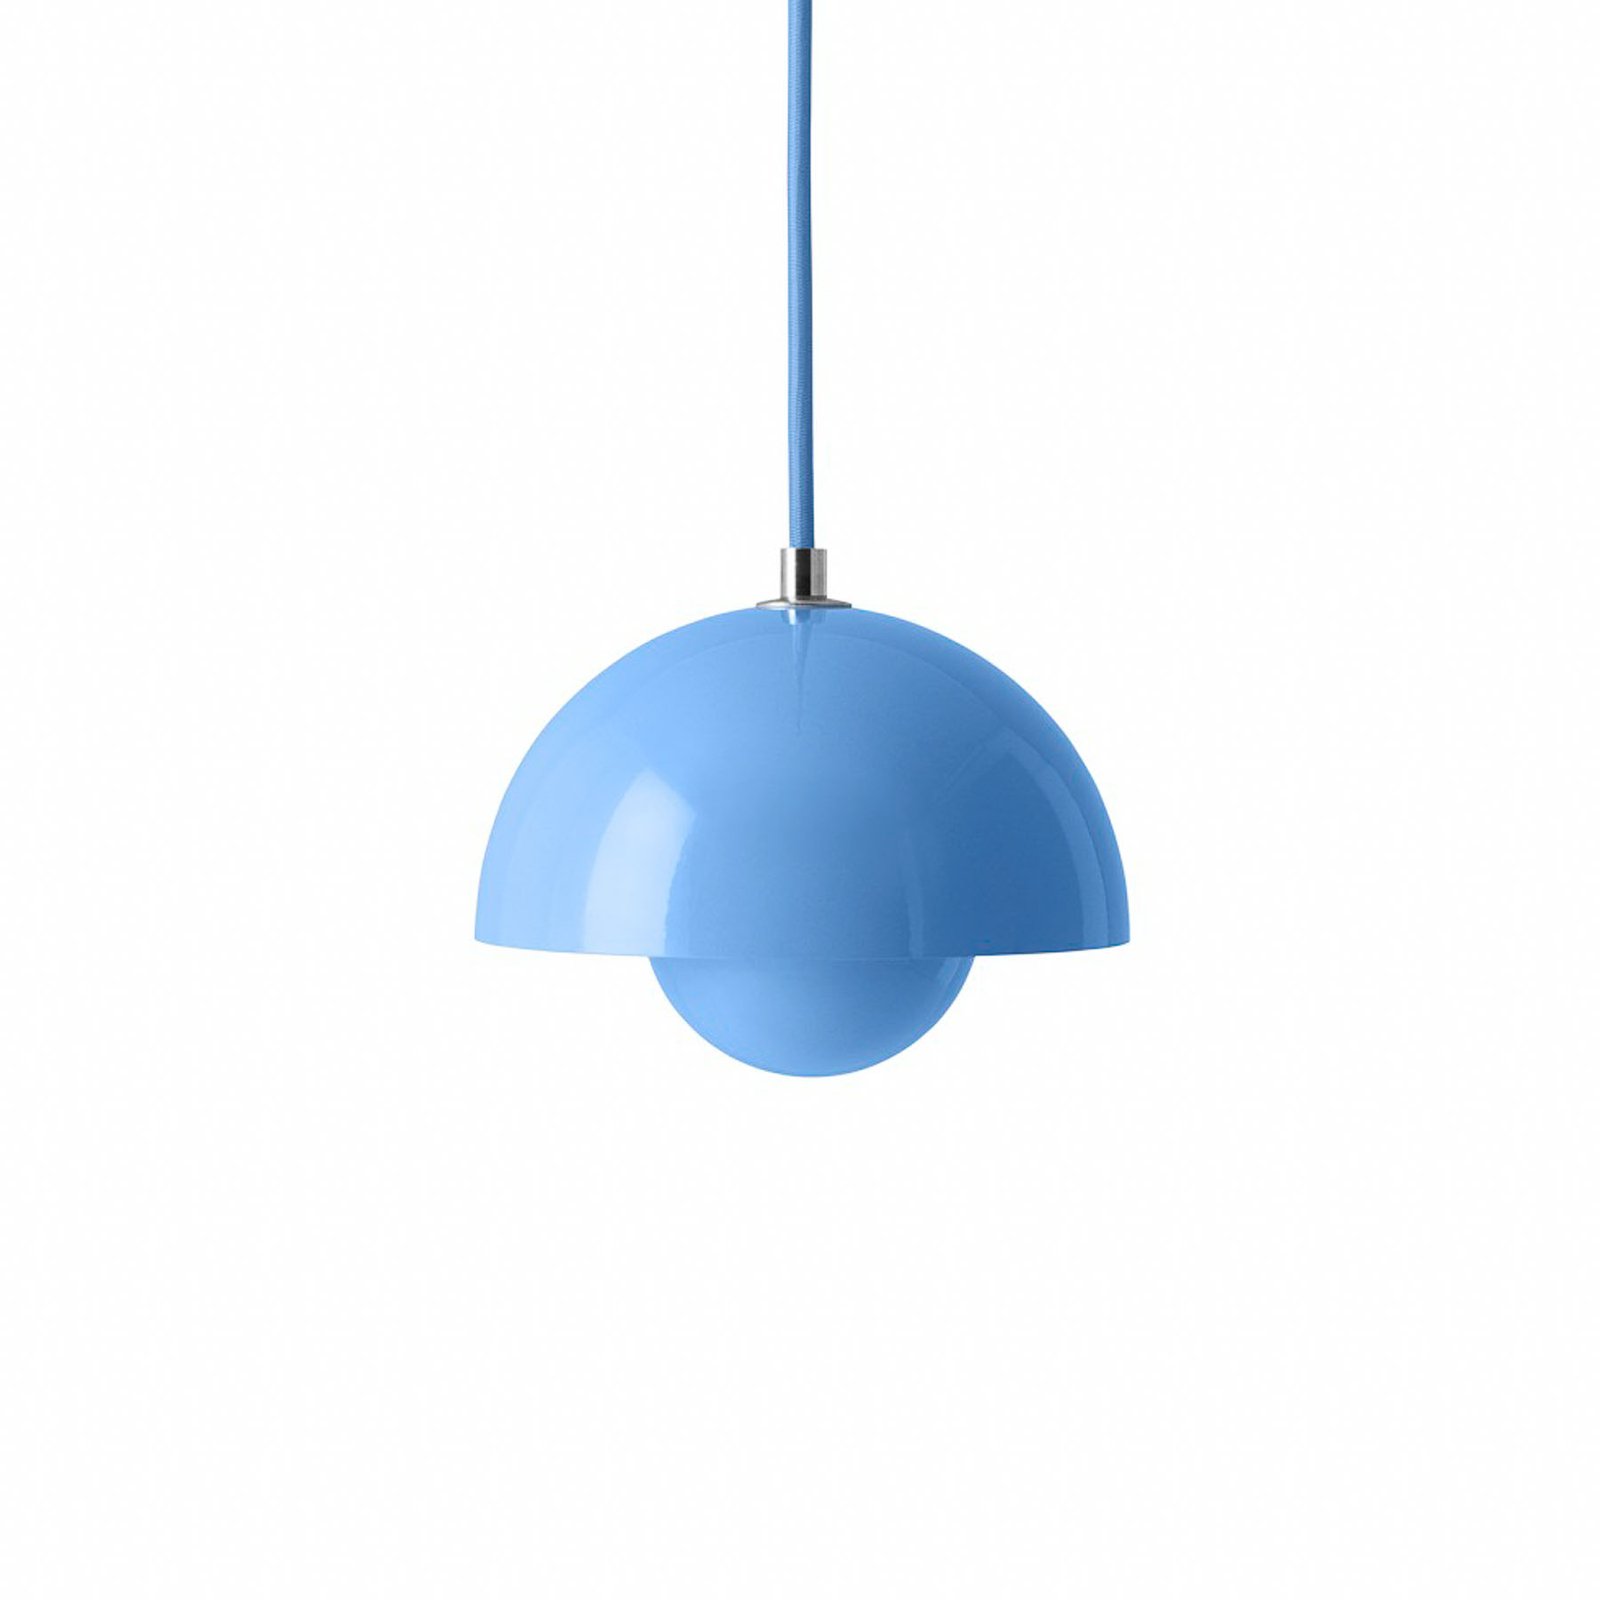 &Luminária suspensa tradicional Flowerpot VP10, Ø 16 cm, azul claro